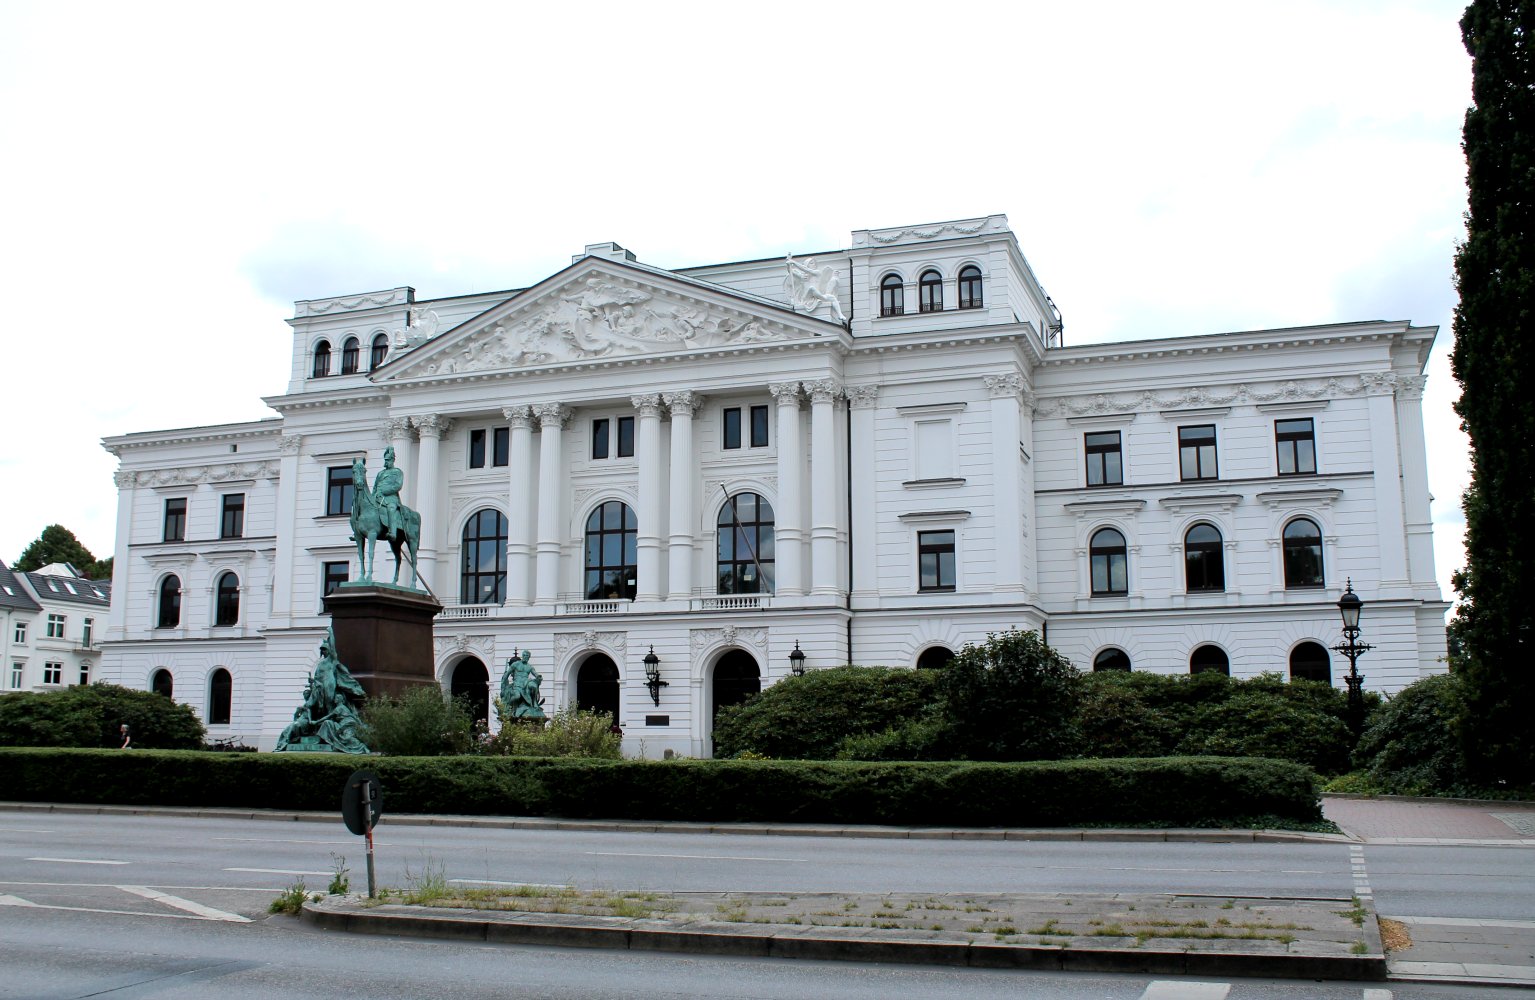  Rathaus - Hamburg-Altona 